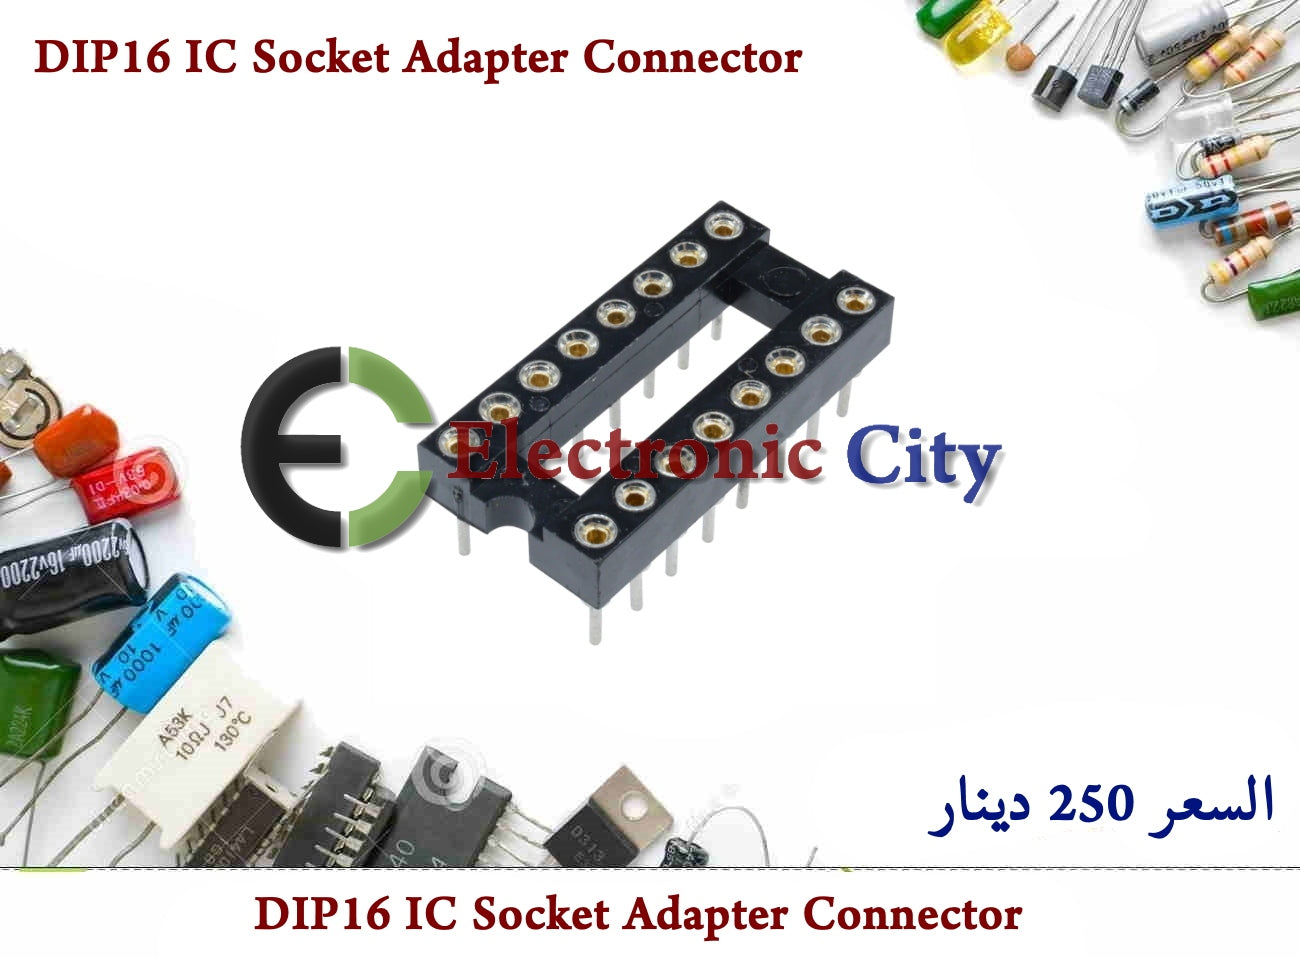 DIP16 IC Socket Adapter Connector